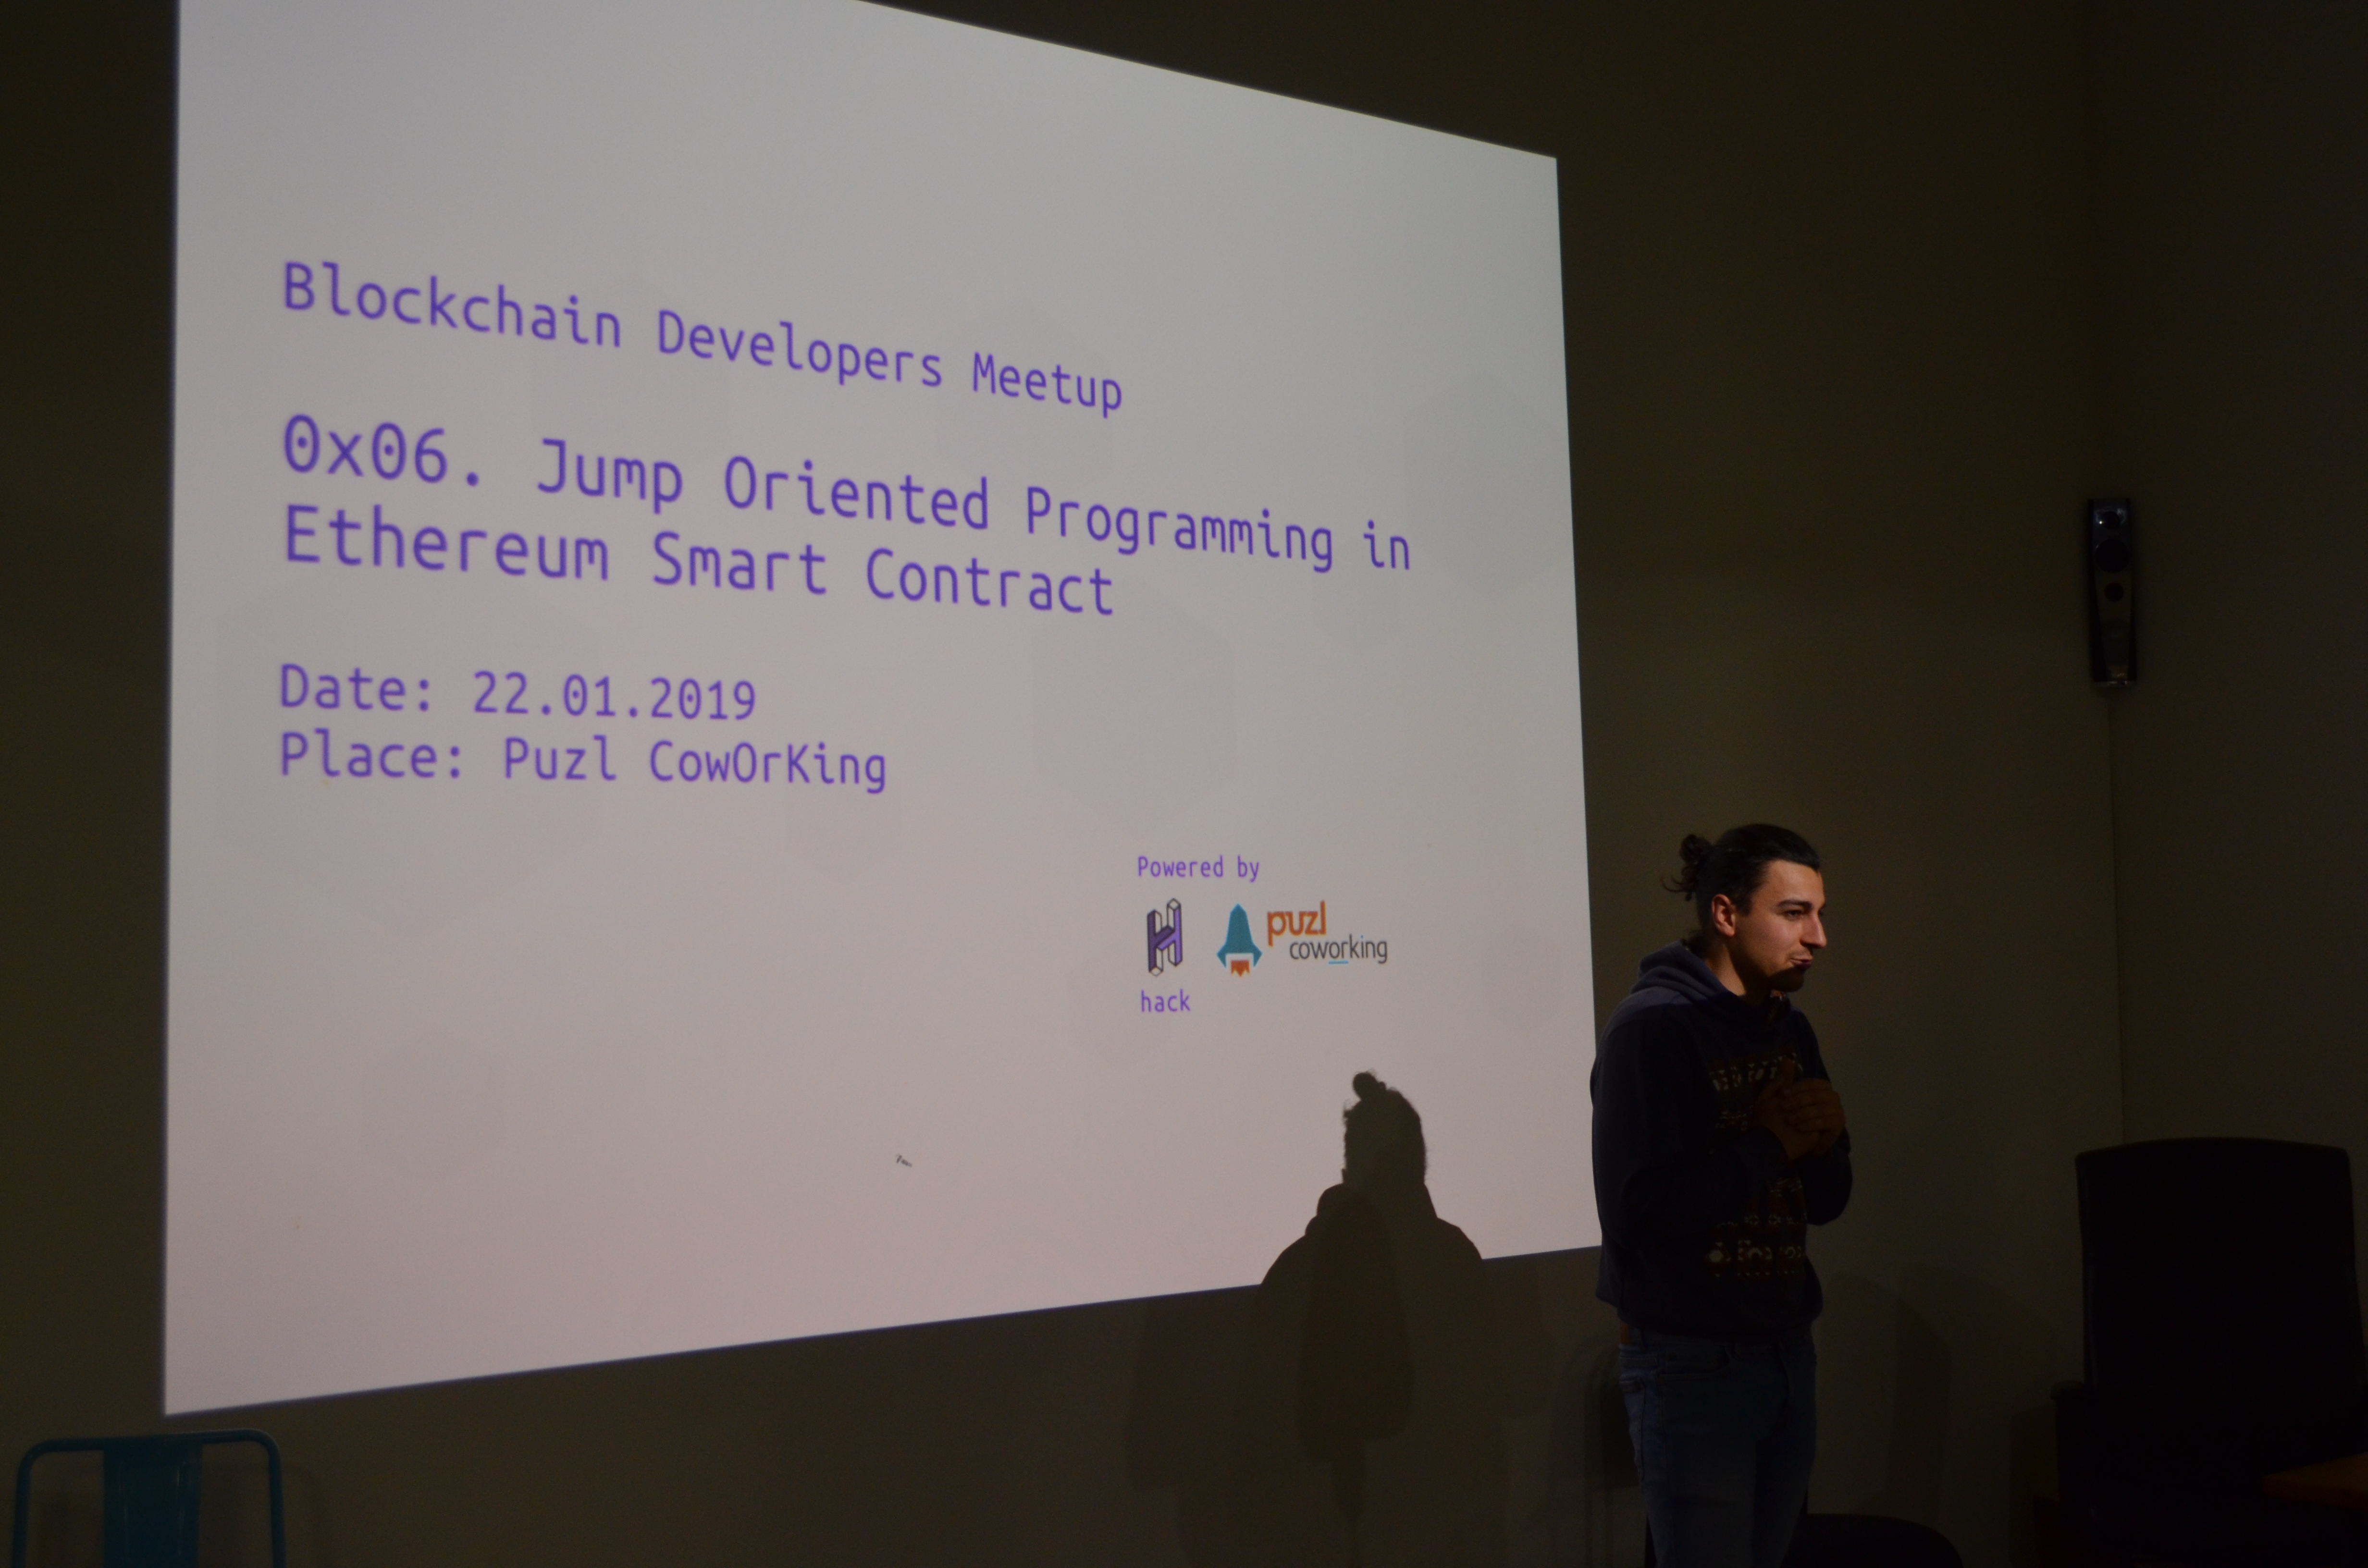 Blockchain Developers Meetup - 0x06 Jump Oriented Programming in Ethereum Smart Contract